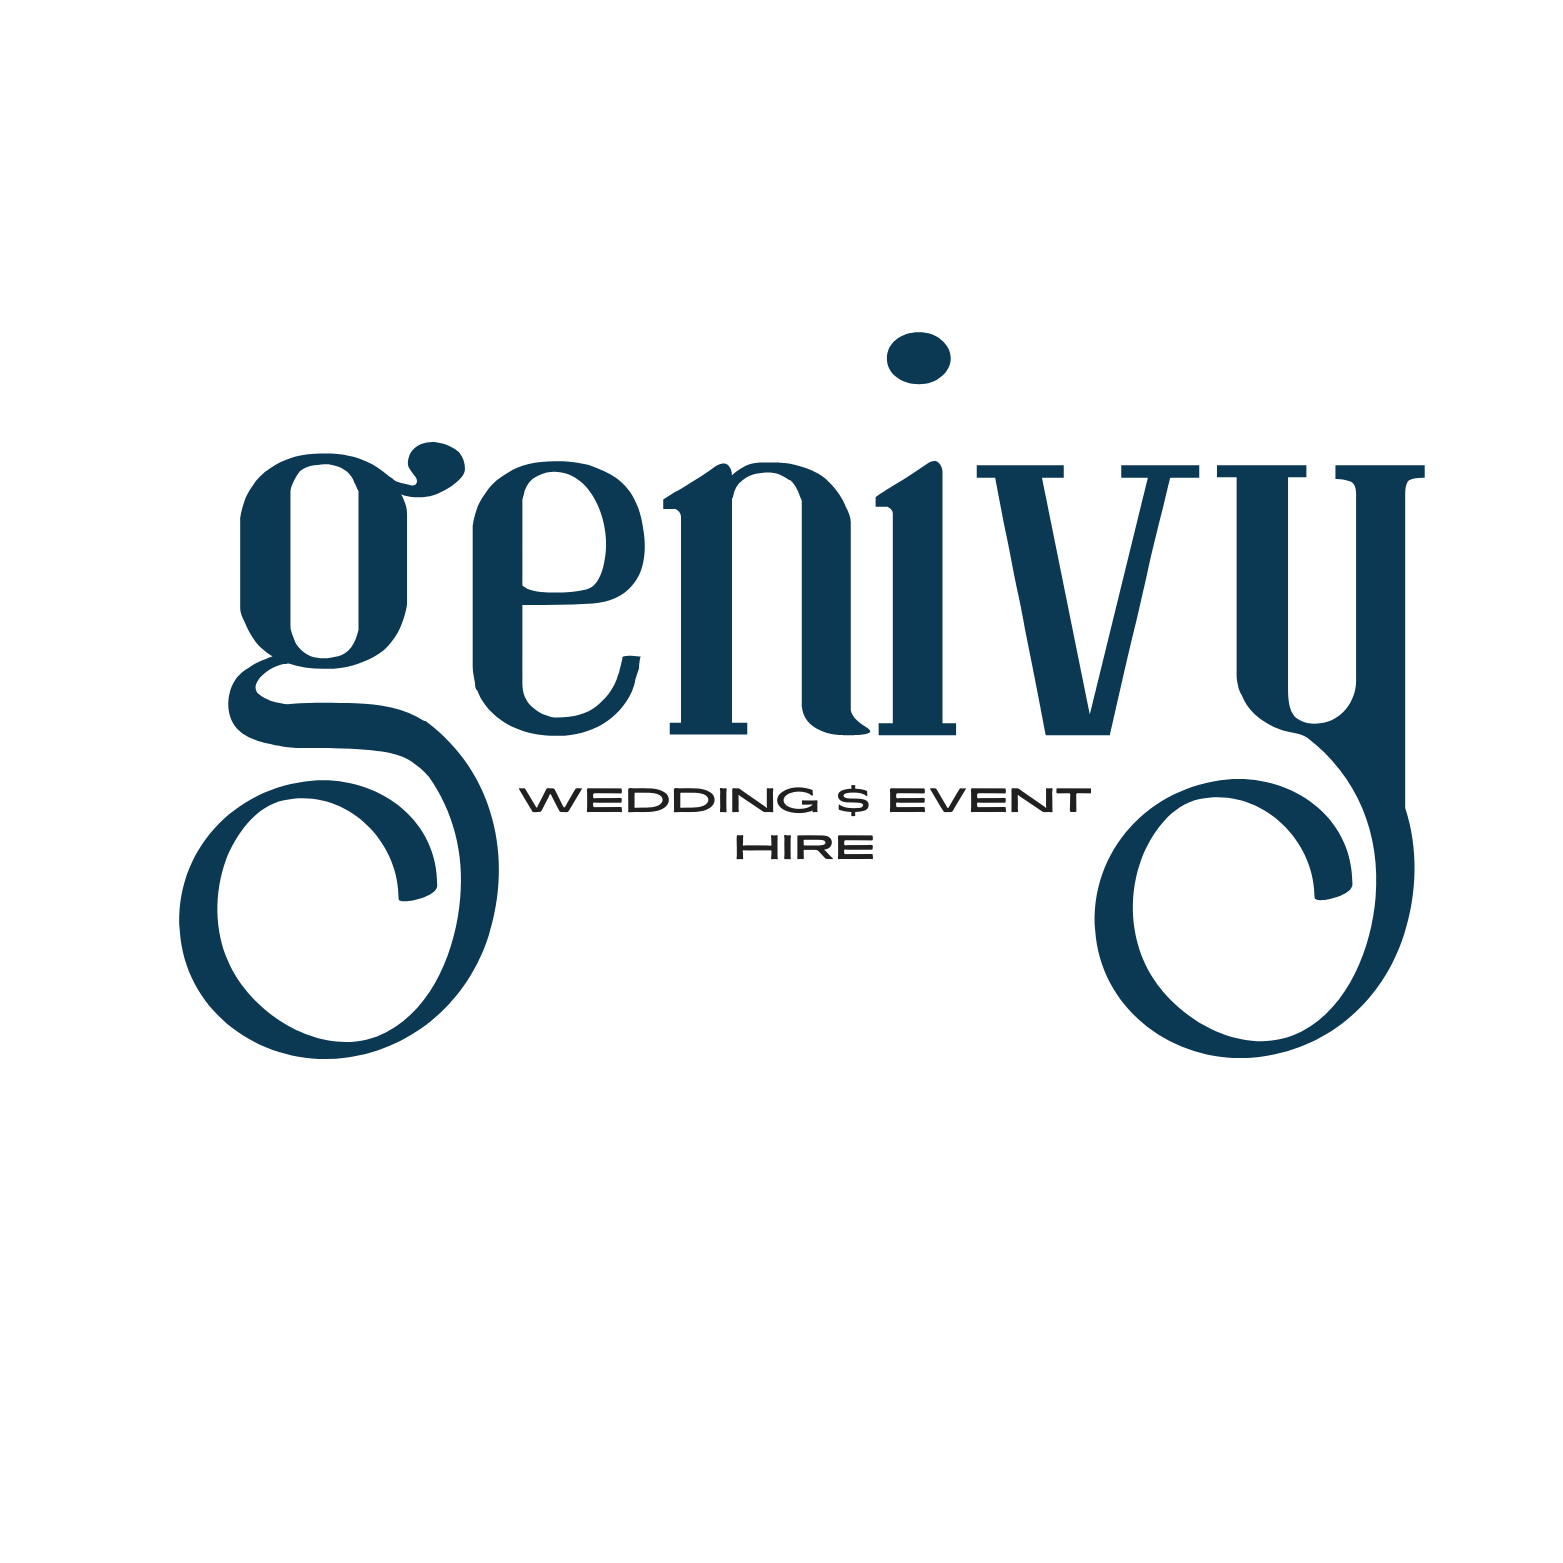 genivyevents.com